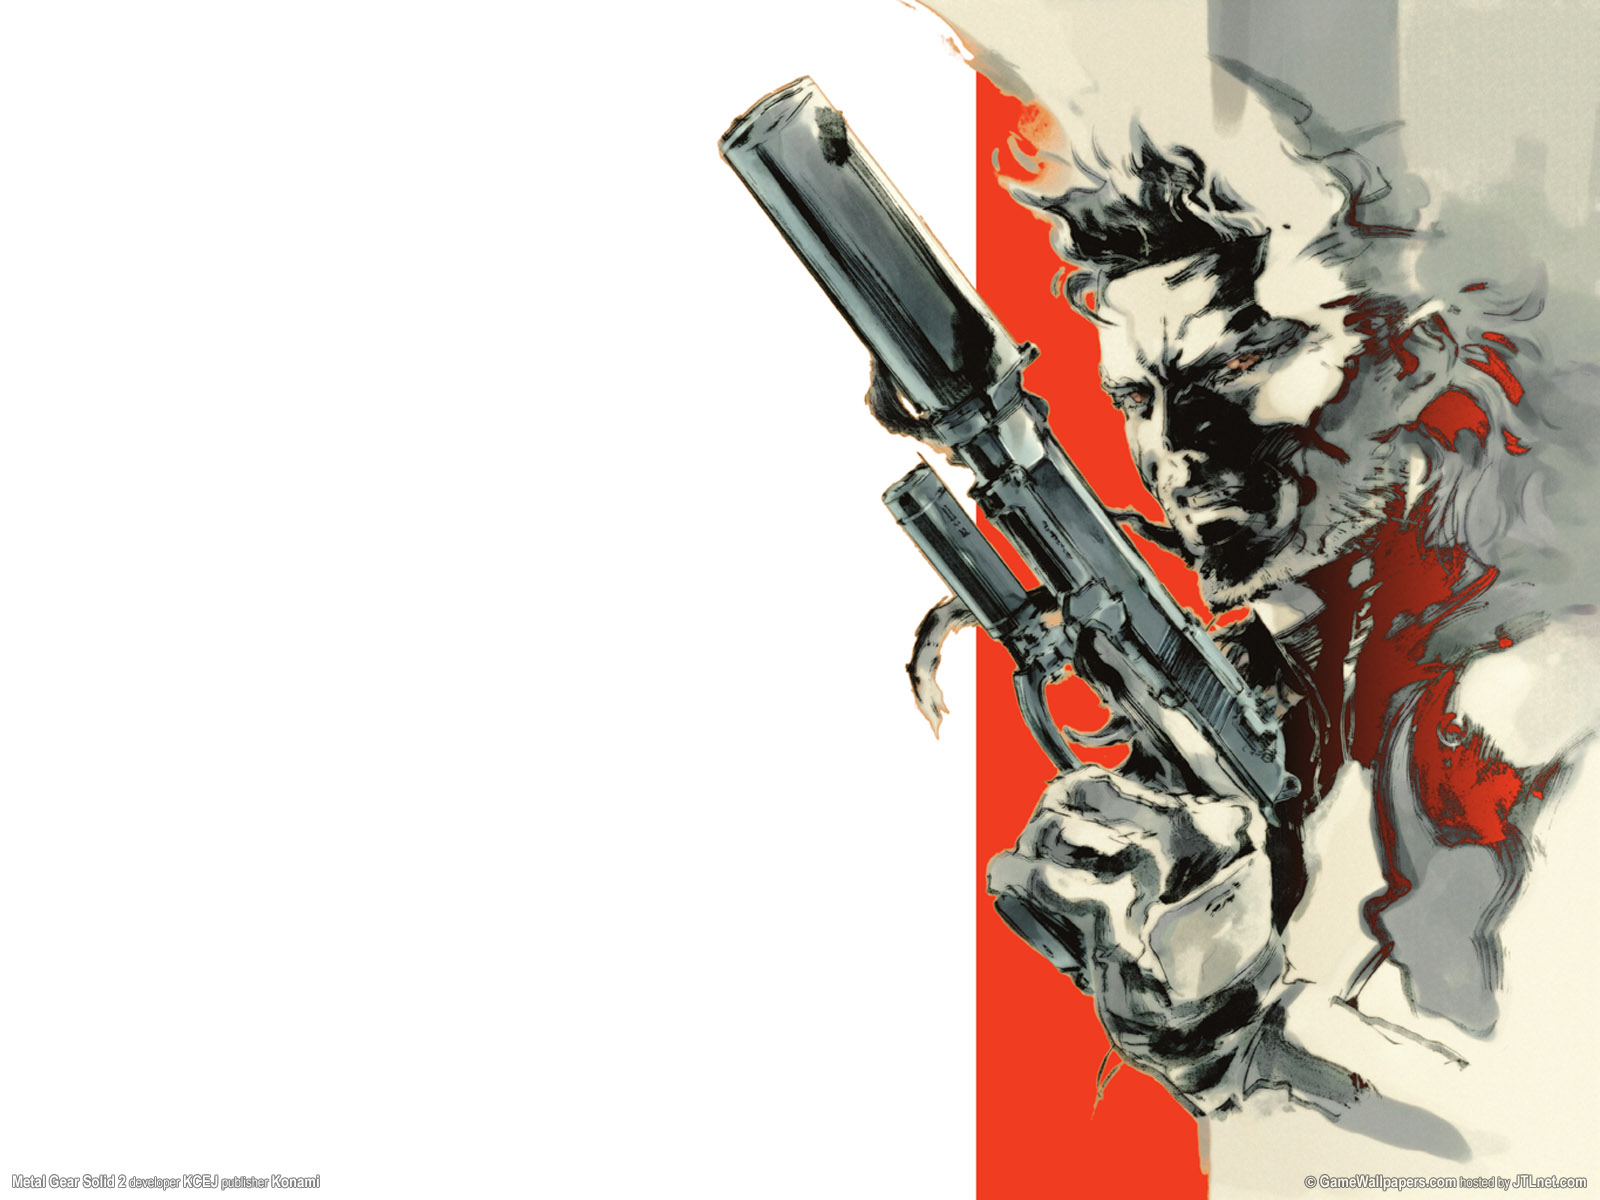 46 Metal Gear Solid 5 Wallpaper On Wallpapersafari